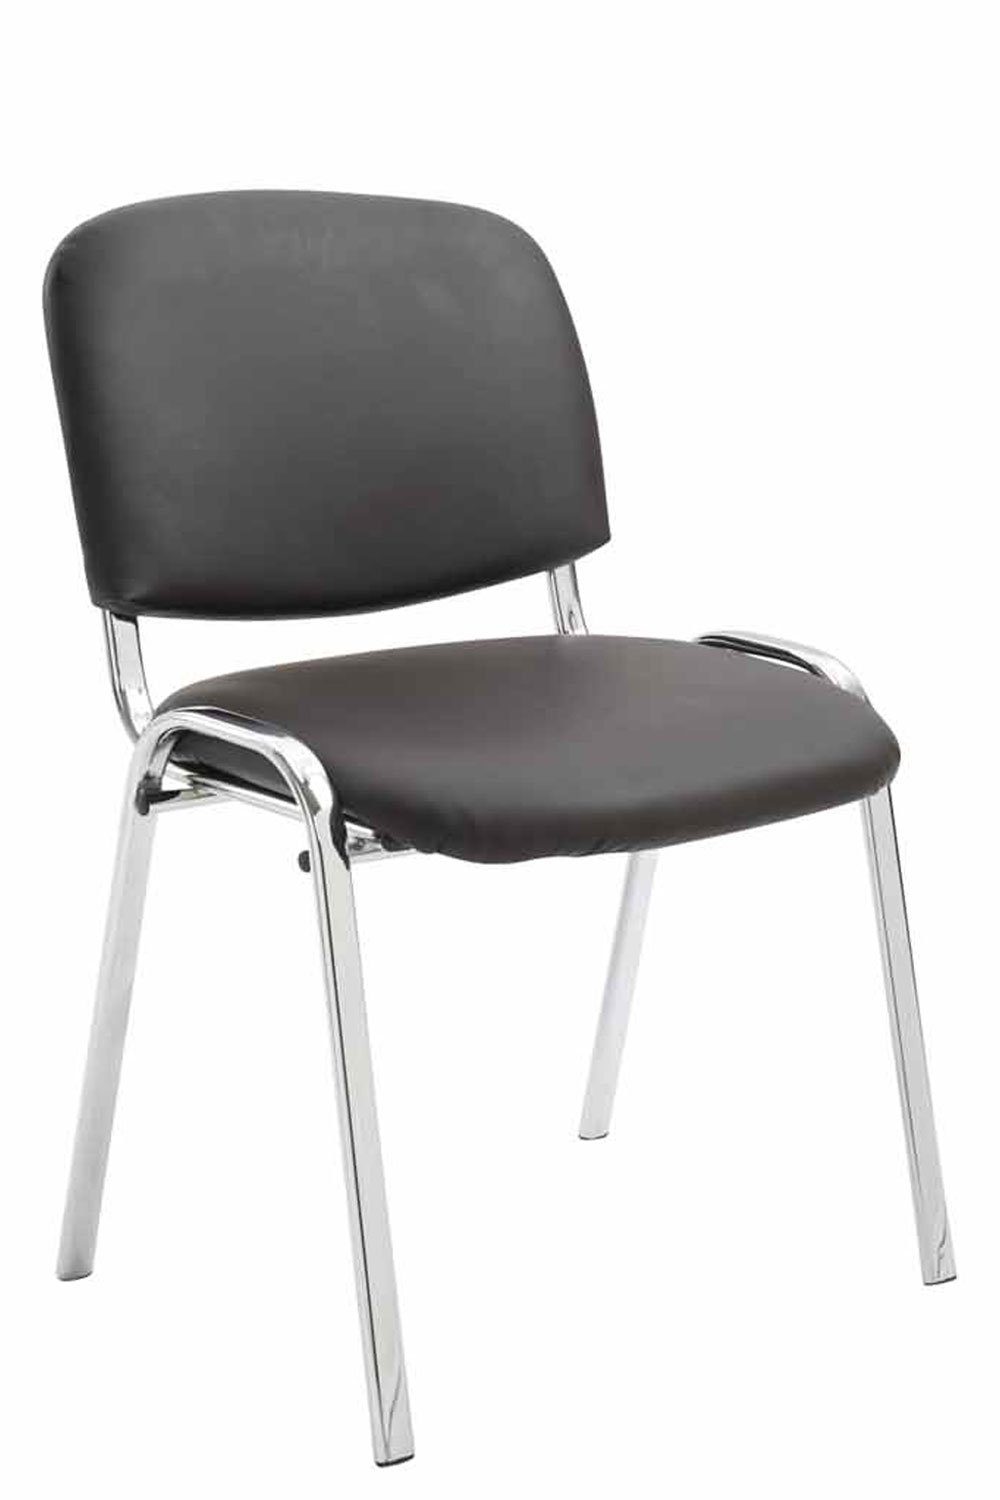 TPFLiving Gestell: hochwertiger mit Messestuhl), - Konferenzstuhl braun Warteraumstuhl Kunstleder Metall Besucherstuhl (Besprechungsstuhl - chrom Sitzfläche: - - Polsterung Keen